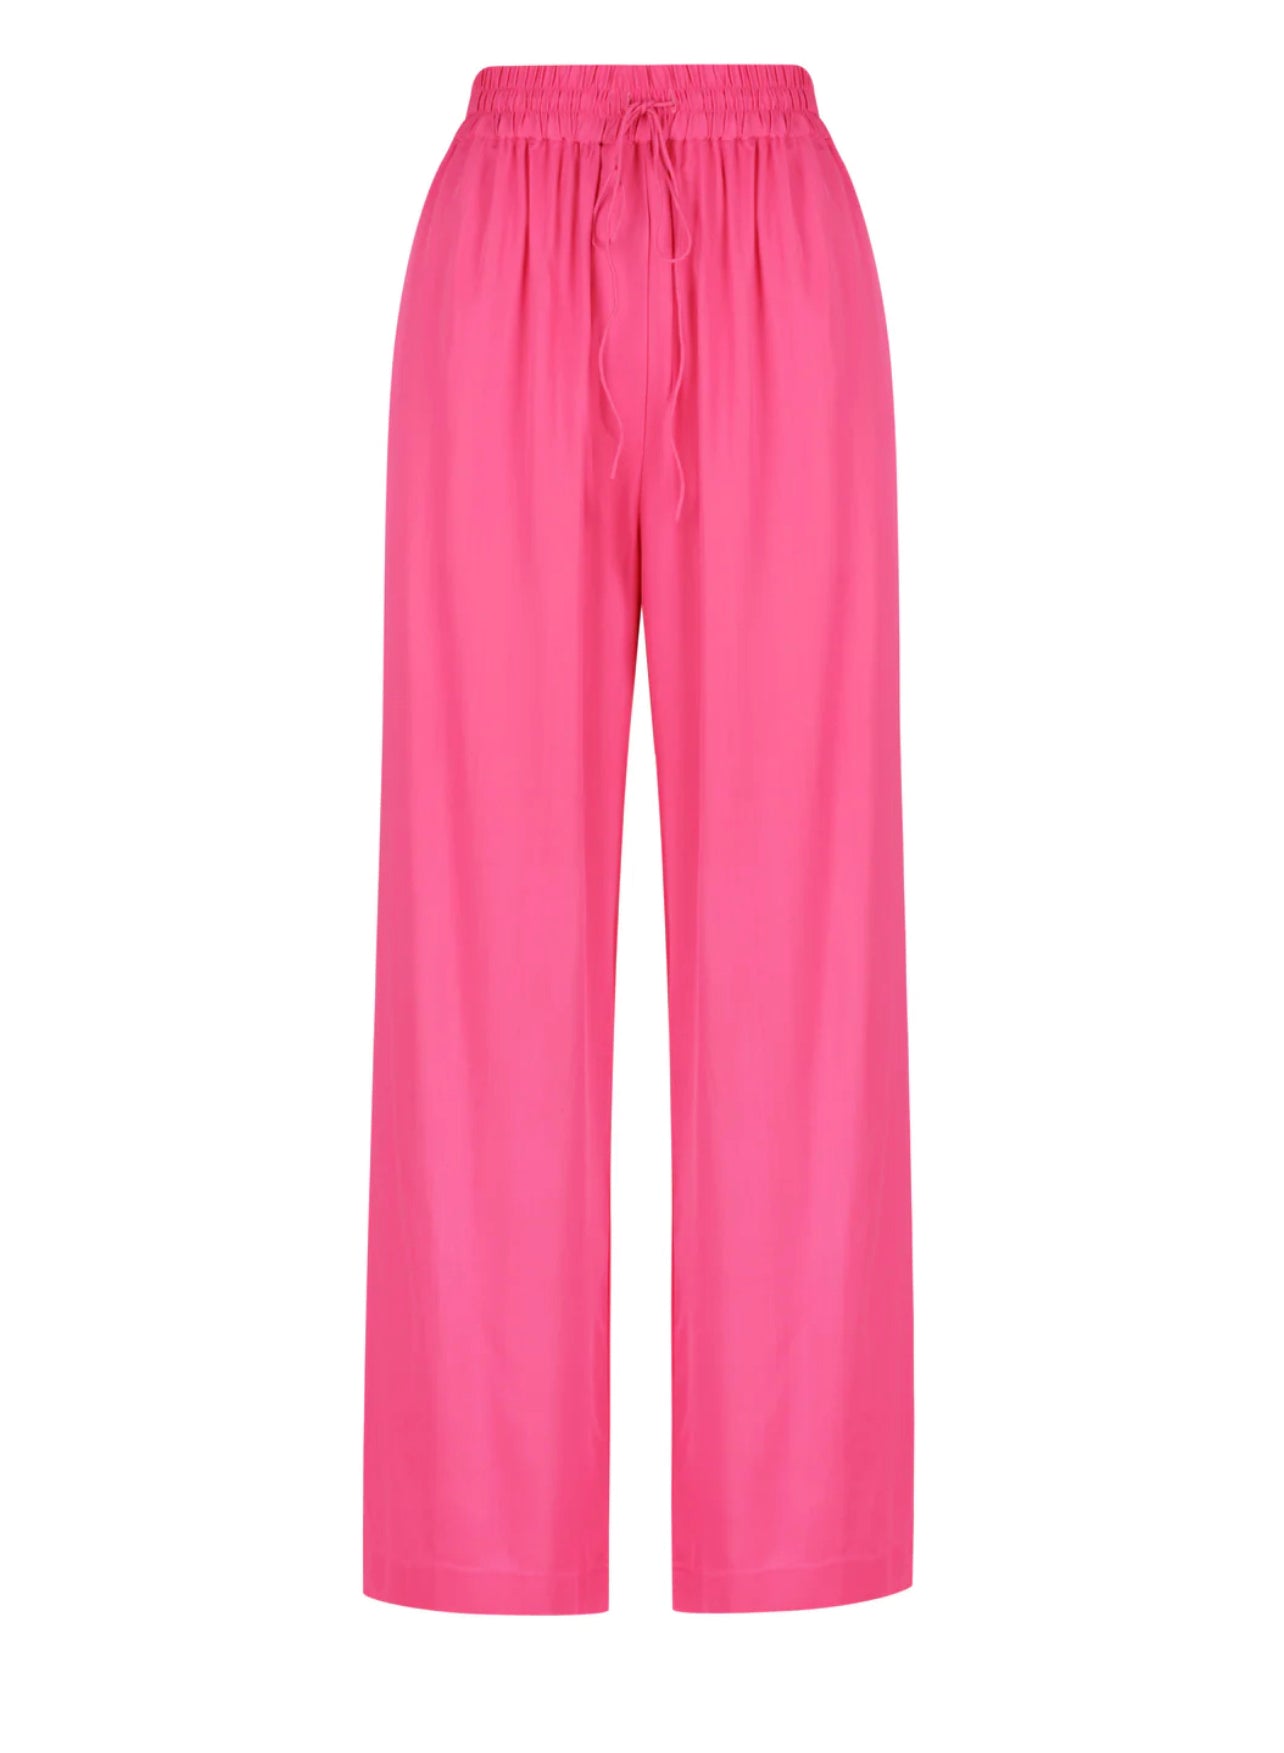 MORRISON - Waverley Pants Pink - Morrison - Pinkhill - darwin fashion - darwin boutique